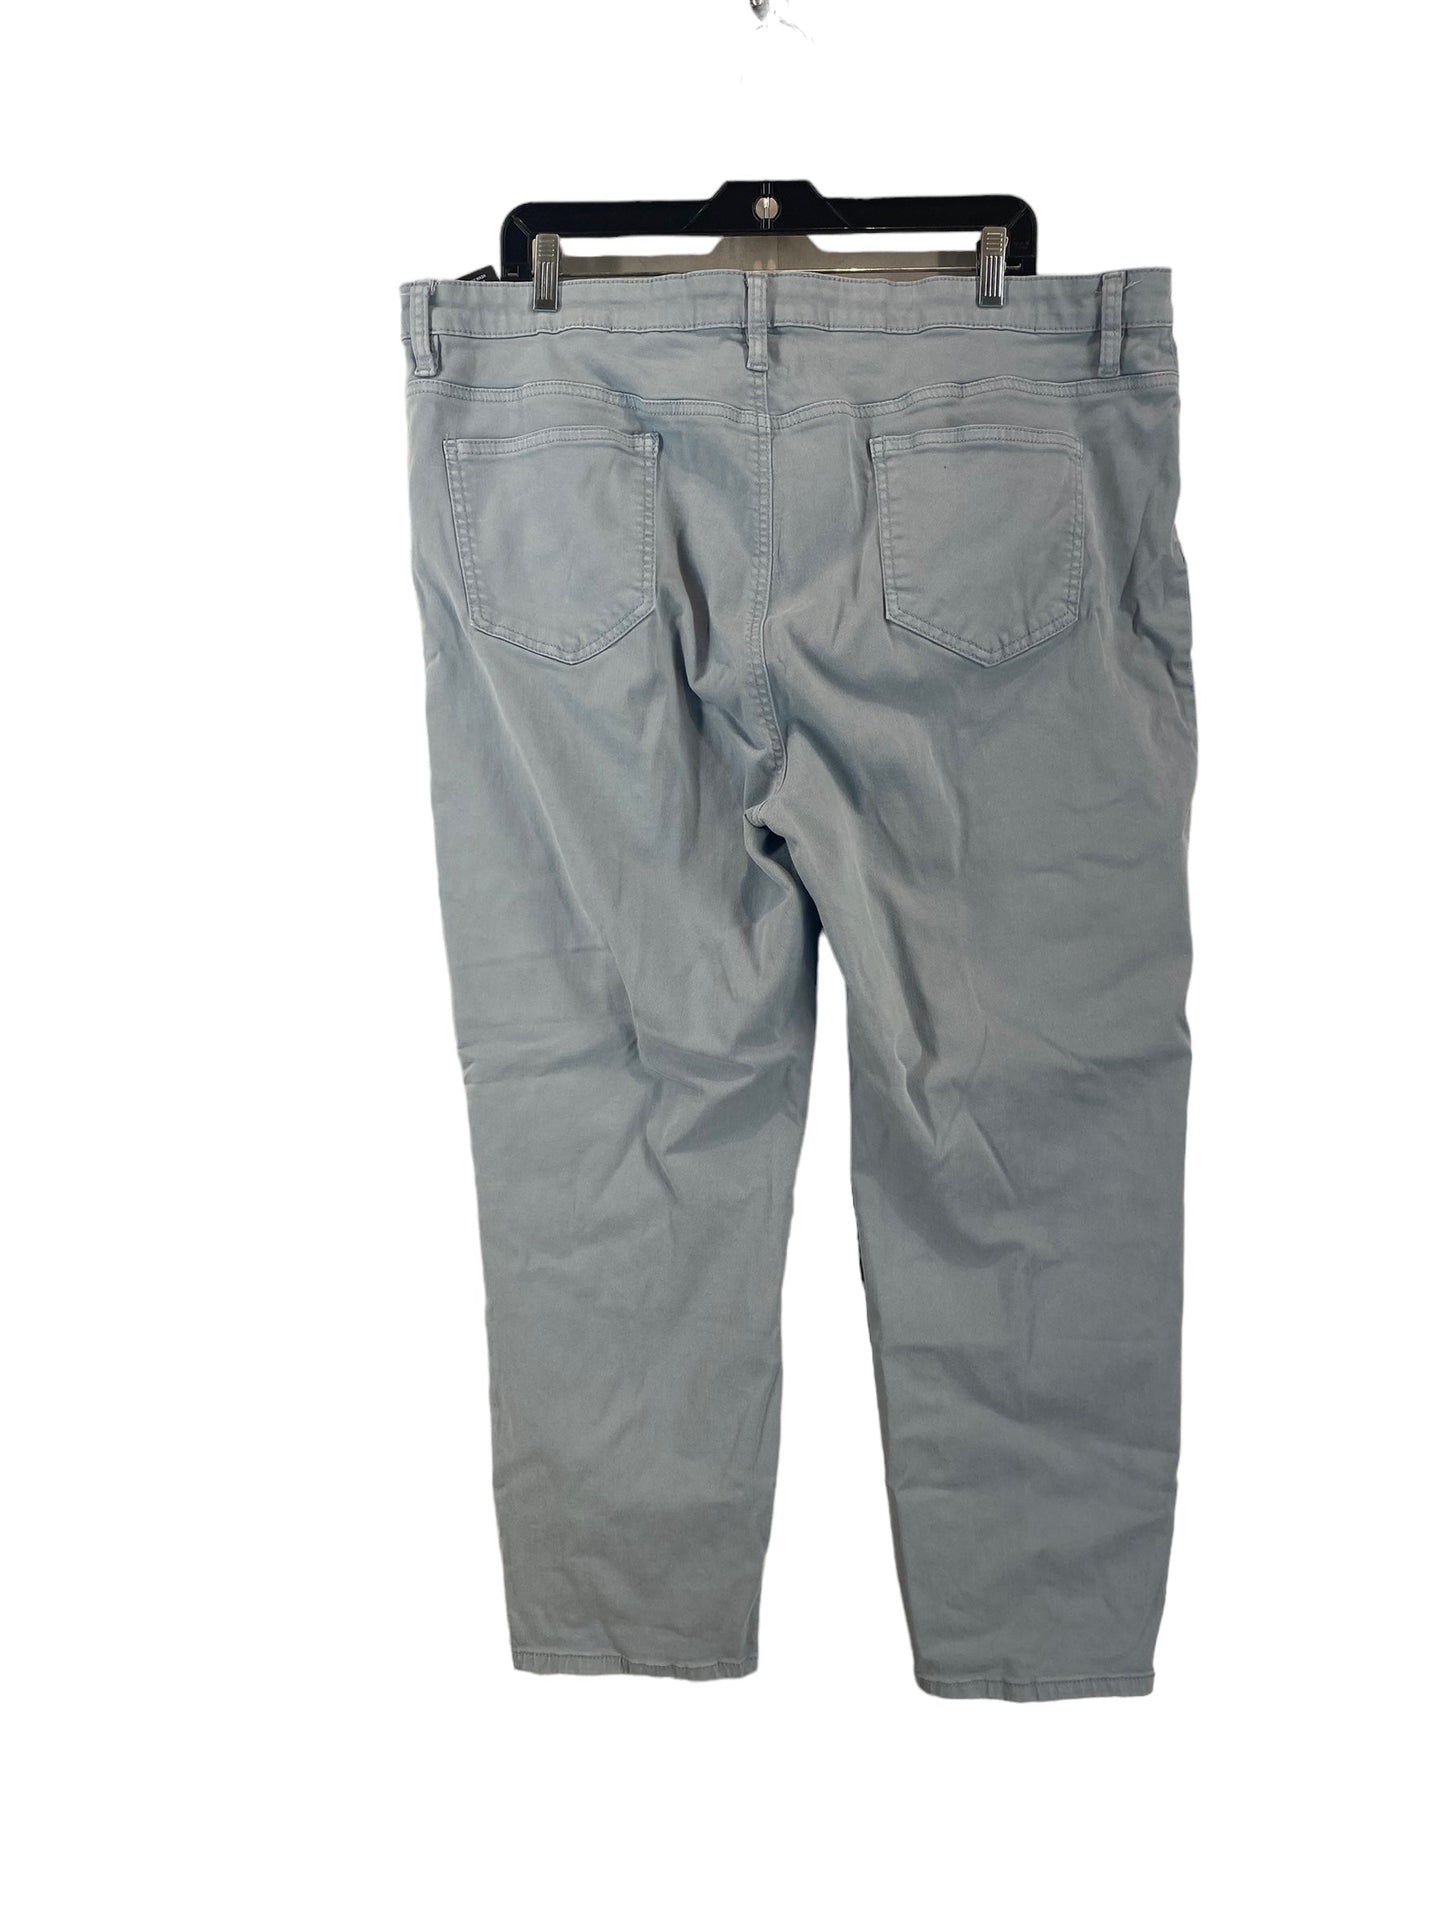 Jeans Skinny By Buffalo David Bitton  Size: 20